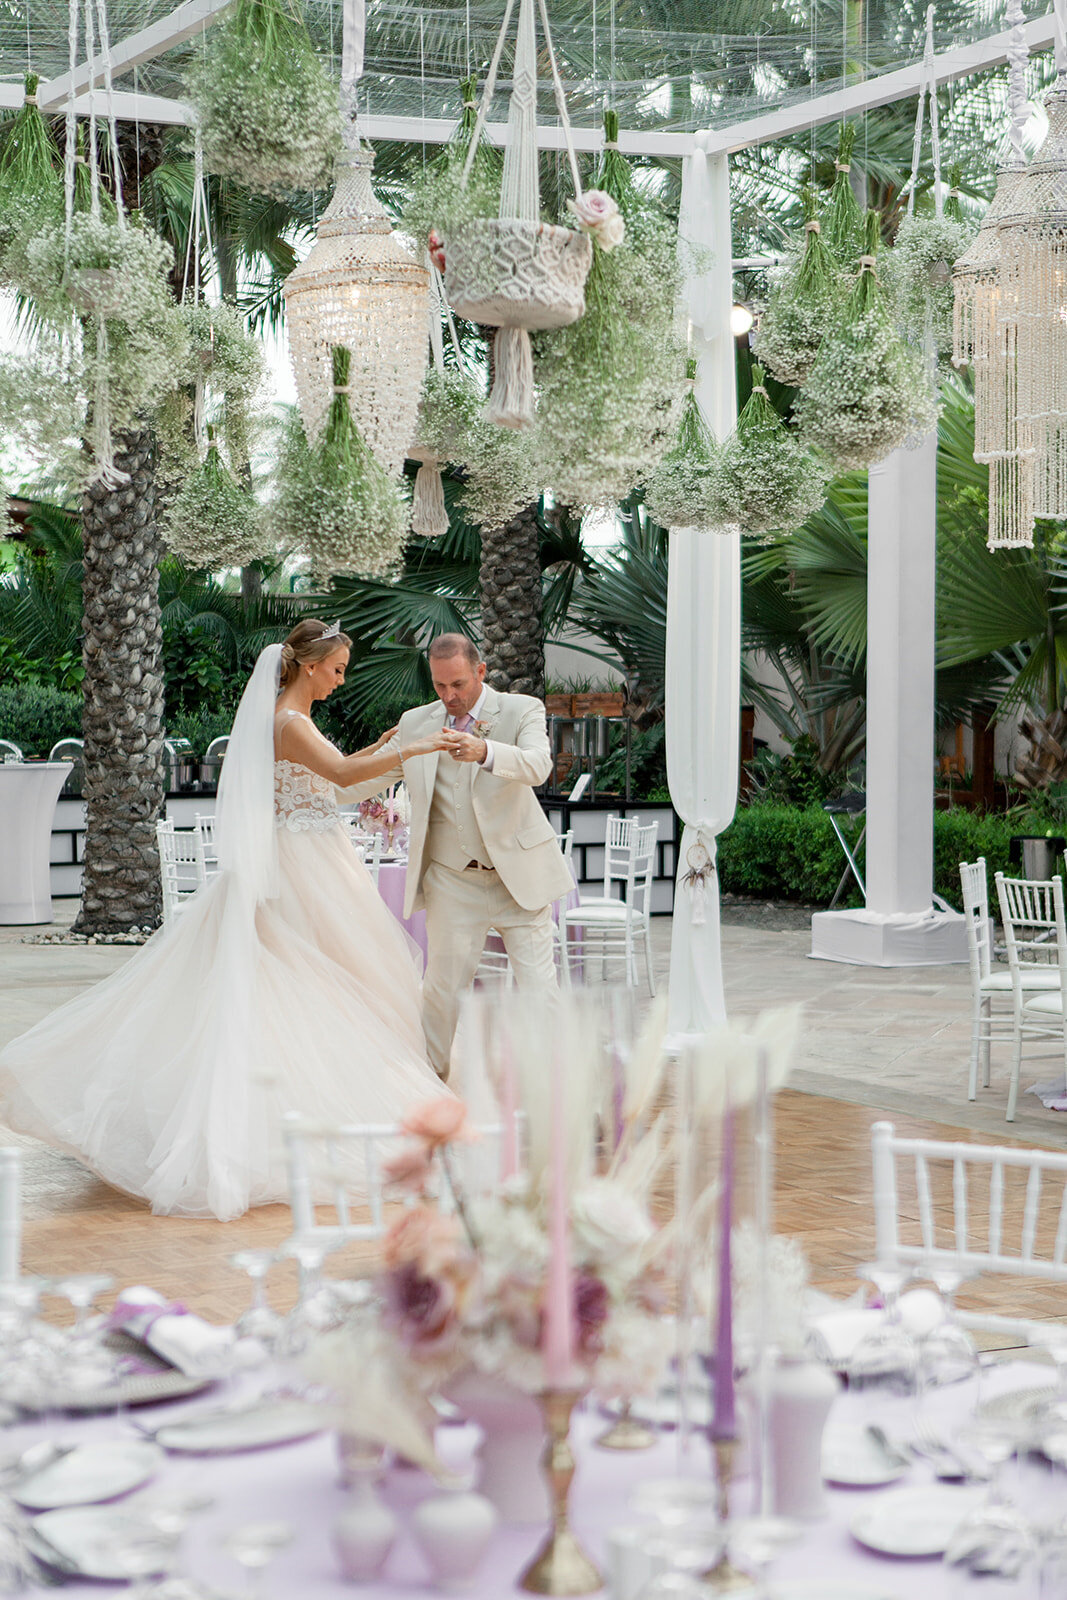 rock-your-event-wedding-styling-planner-designer-dubai-UAE-romantic-bali-inspired-boho-celebration